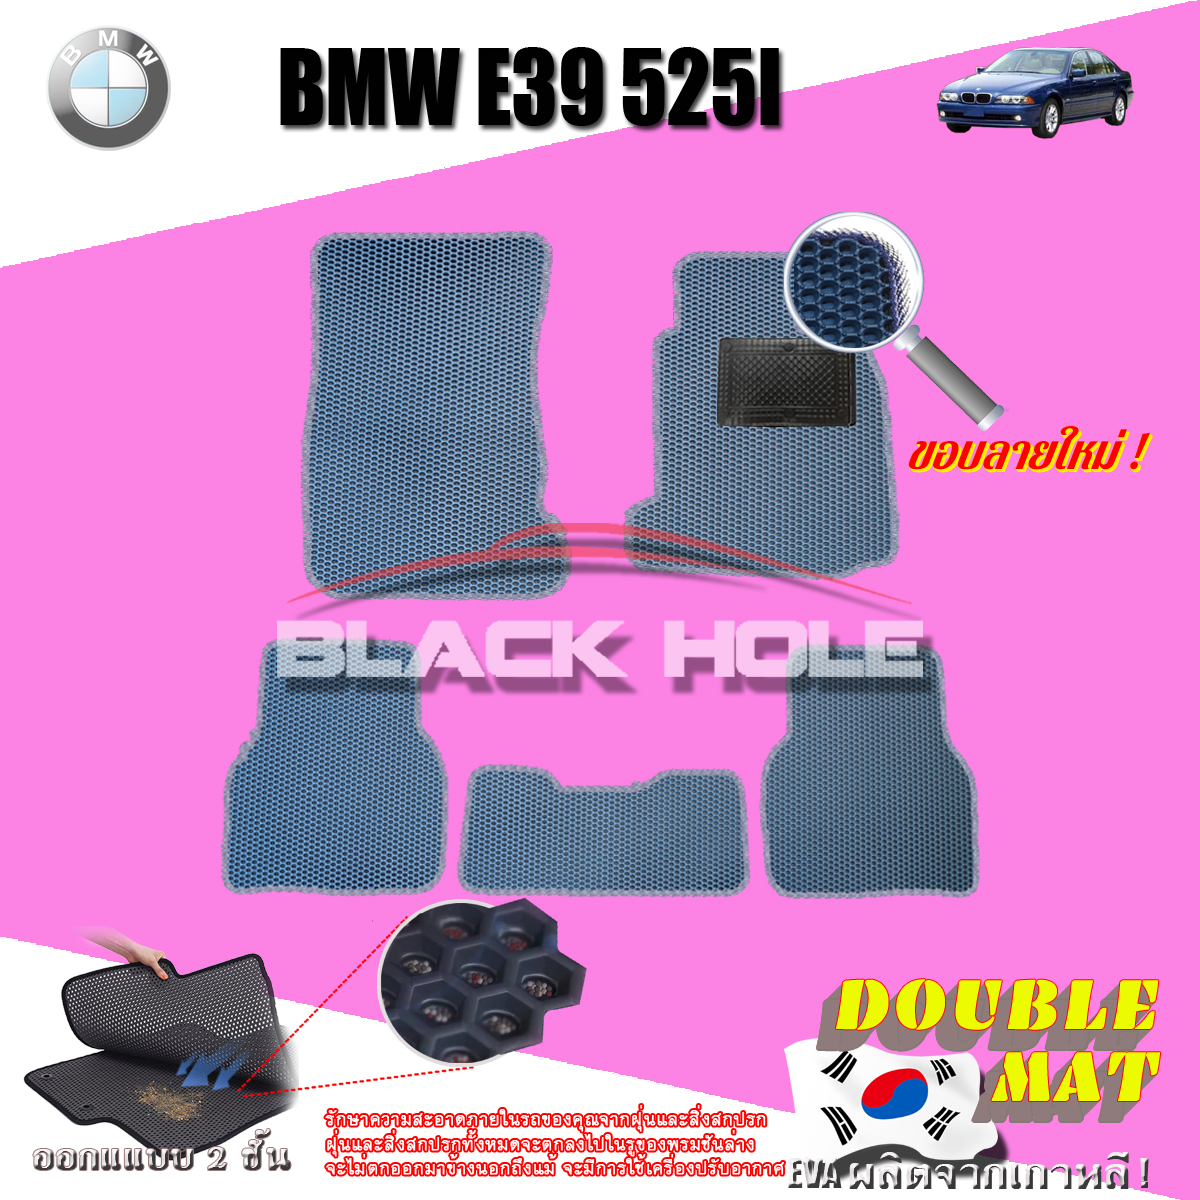 BMW E39 525i ปี 1995 - ปี 2004 พรมรถยนต์E39 พรมเข้ารูปสองชั้นแบบรูรังผึ้ง Blackhole Double Mat (ชุดห้องโดยสาร) สี SET B ( 5 Pcs. ) New Velcro Blue - น้ำเงินขอบลายใหม่ ( 5 ชิ้น )